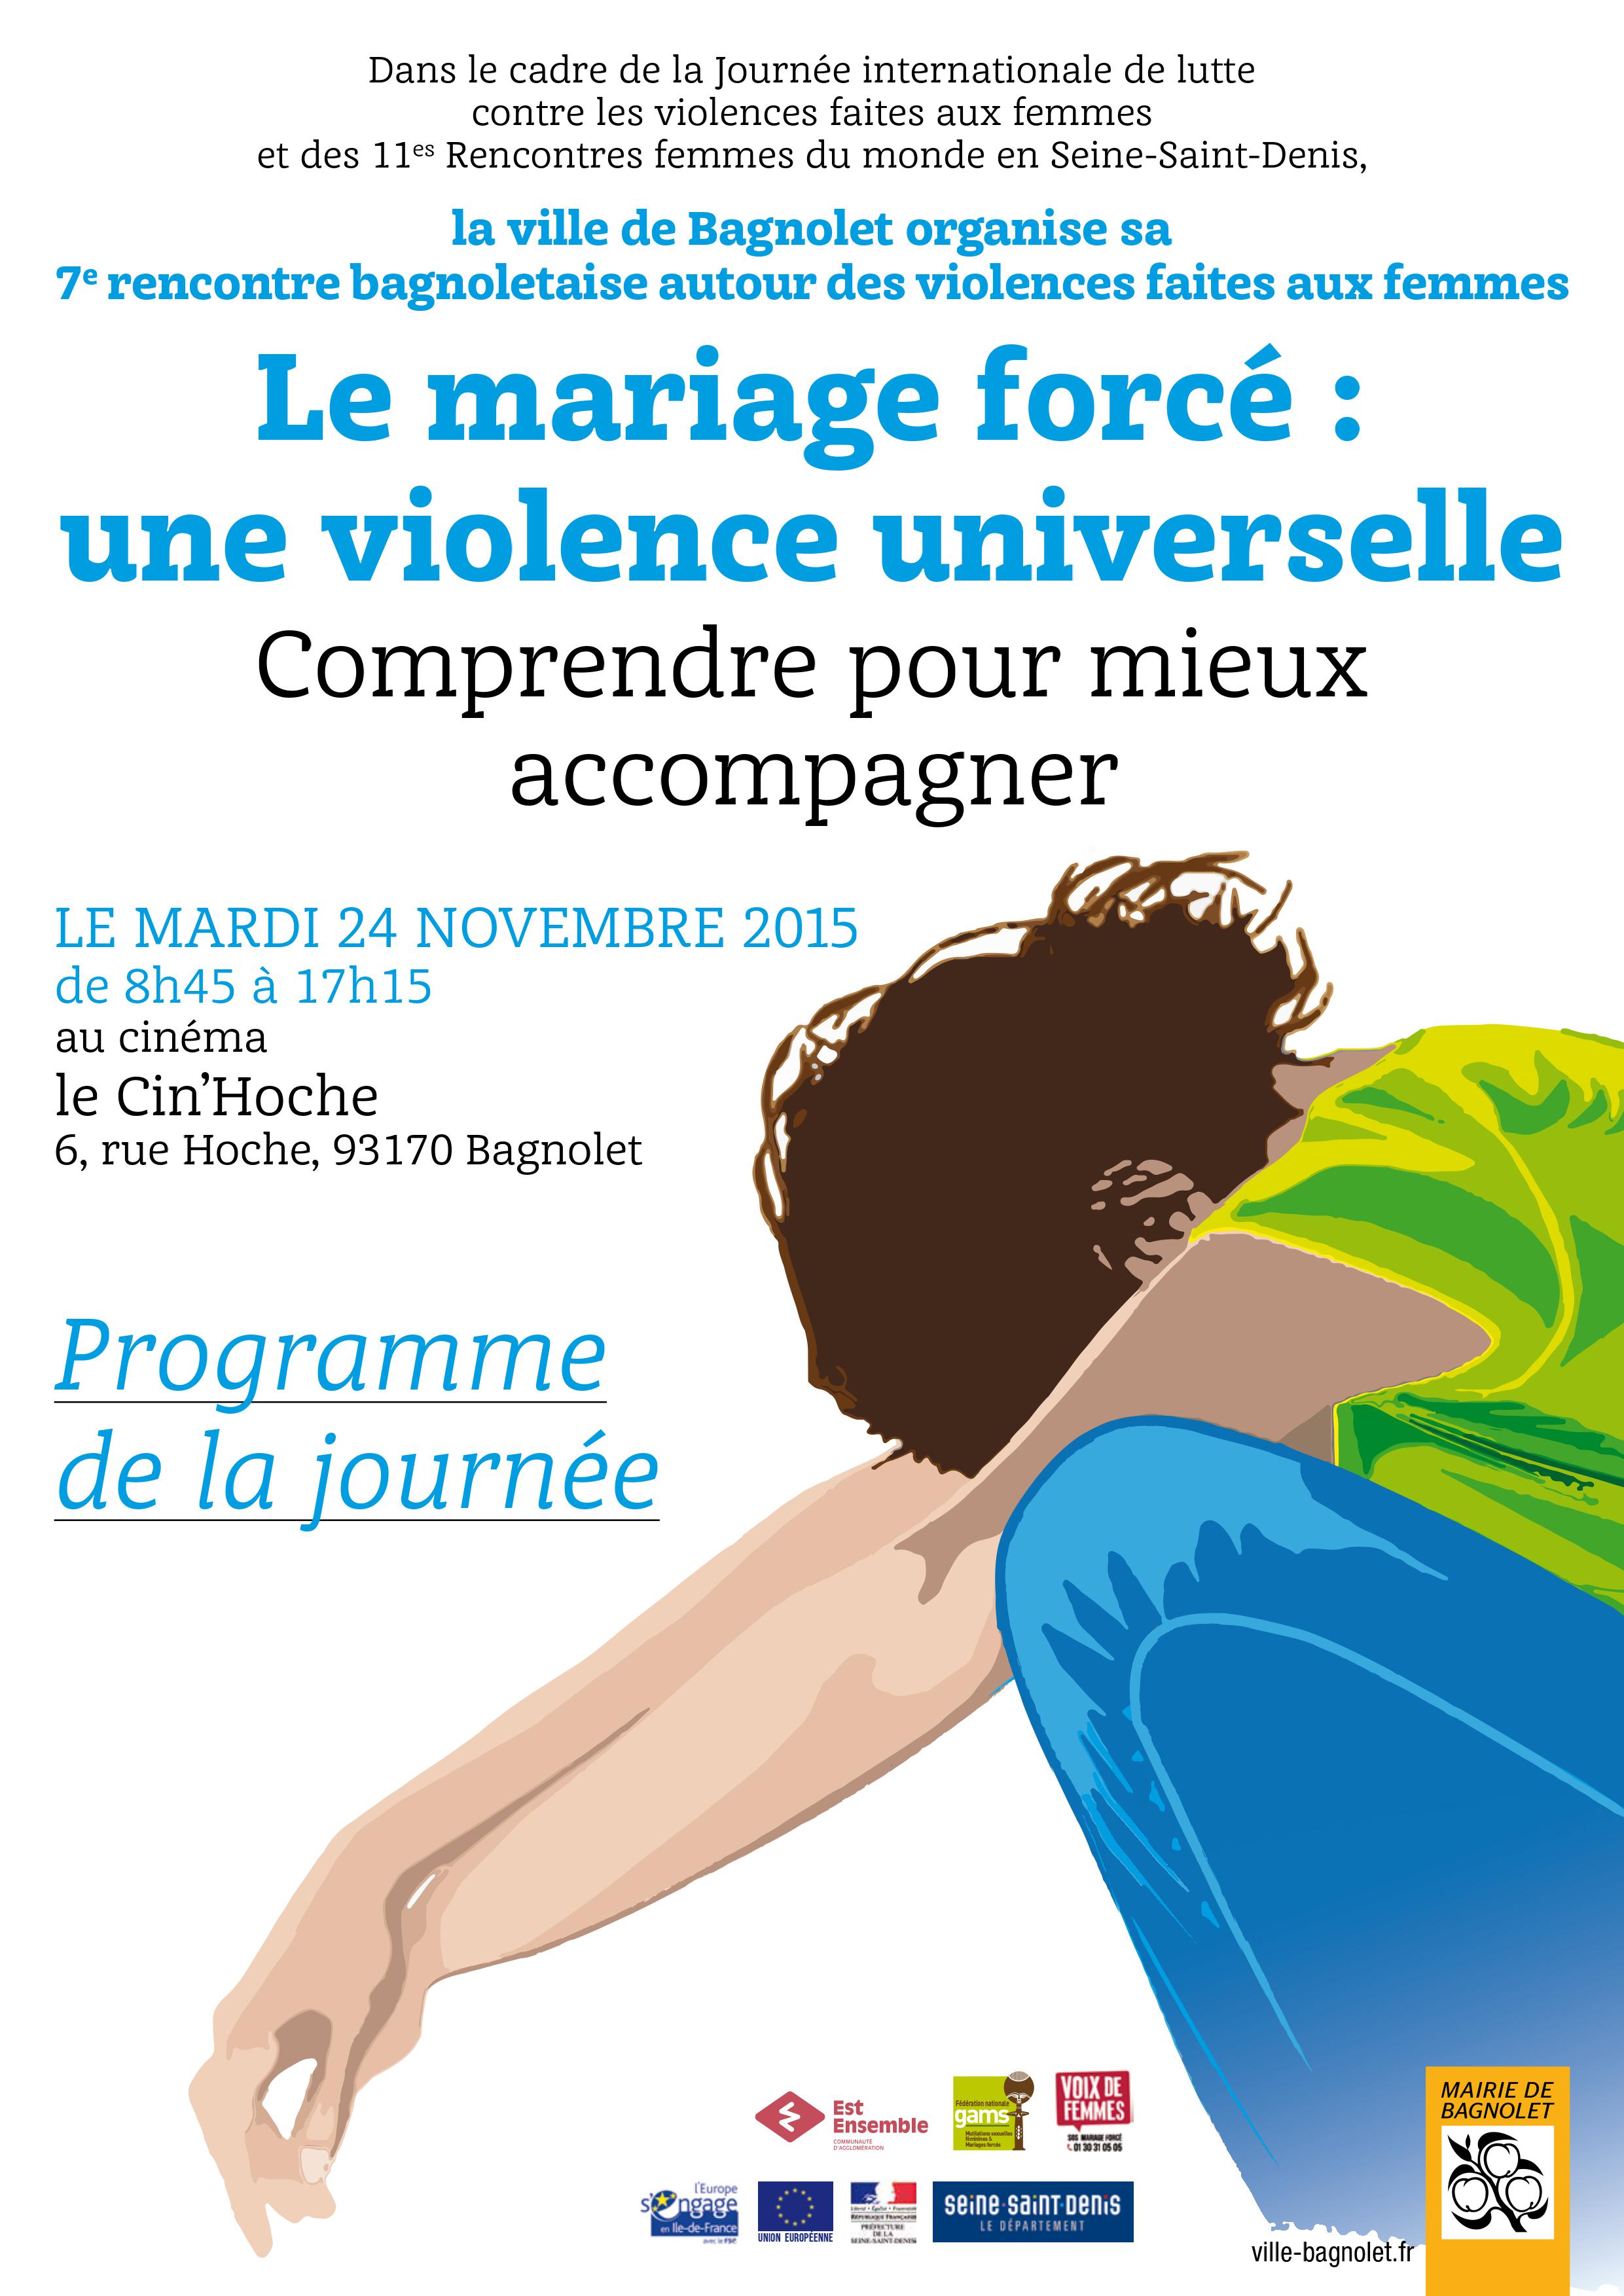 Programme 20 novembre 2015 Bagnolet